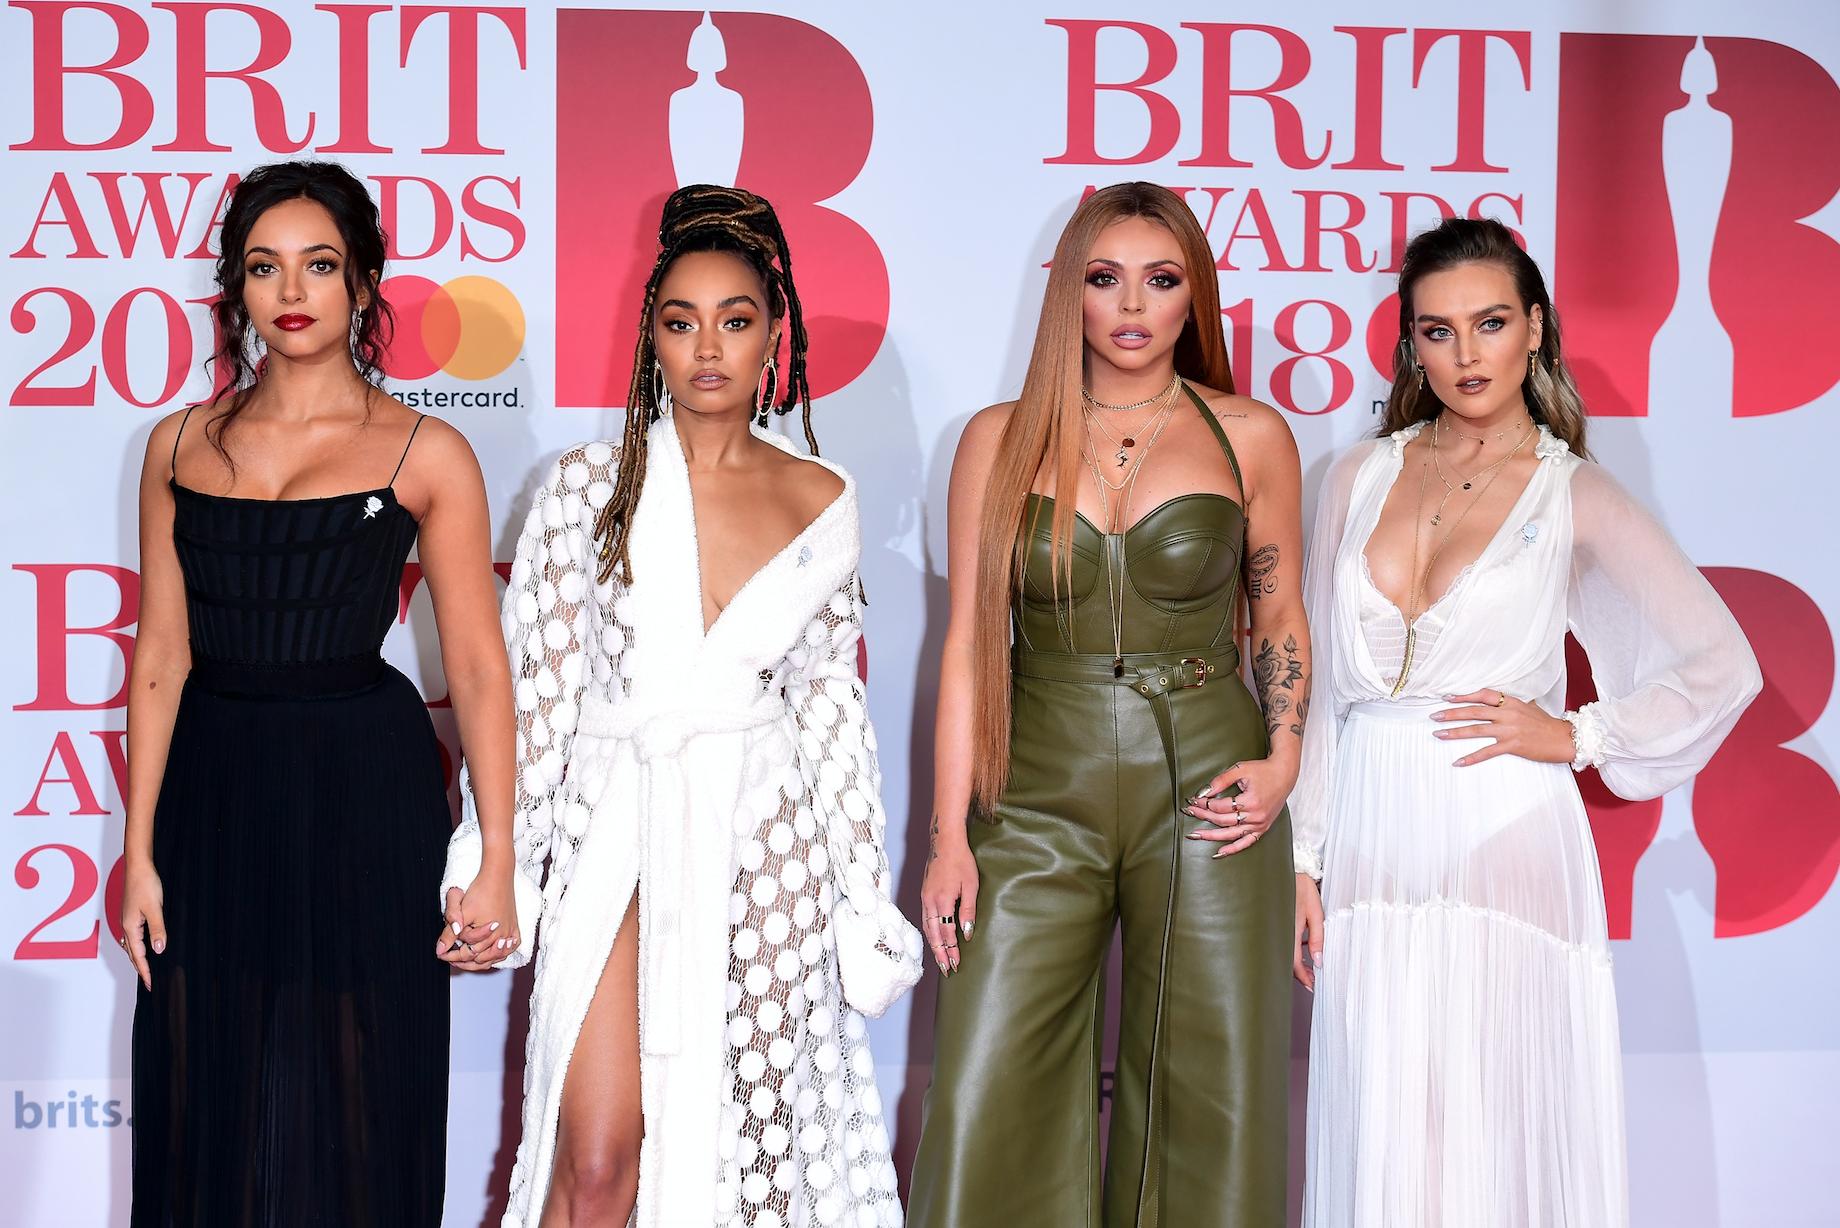 Little Mix BRIT Awards 2018